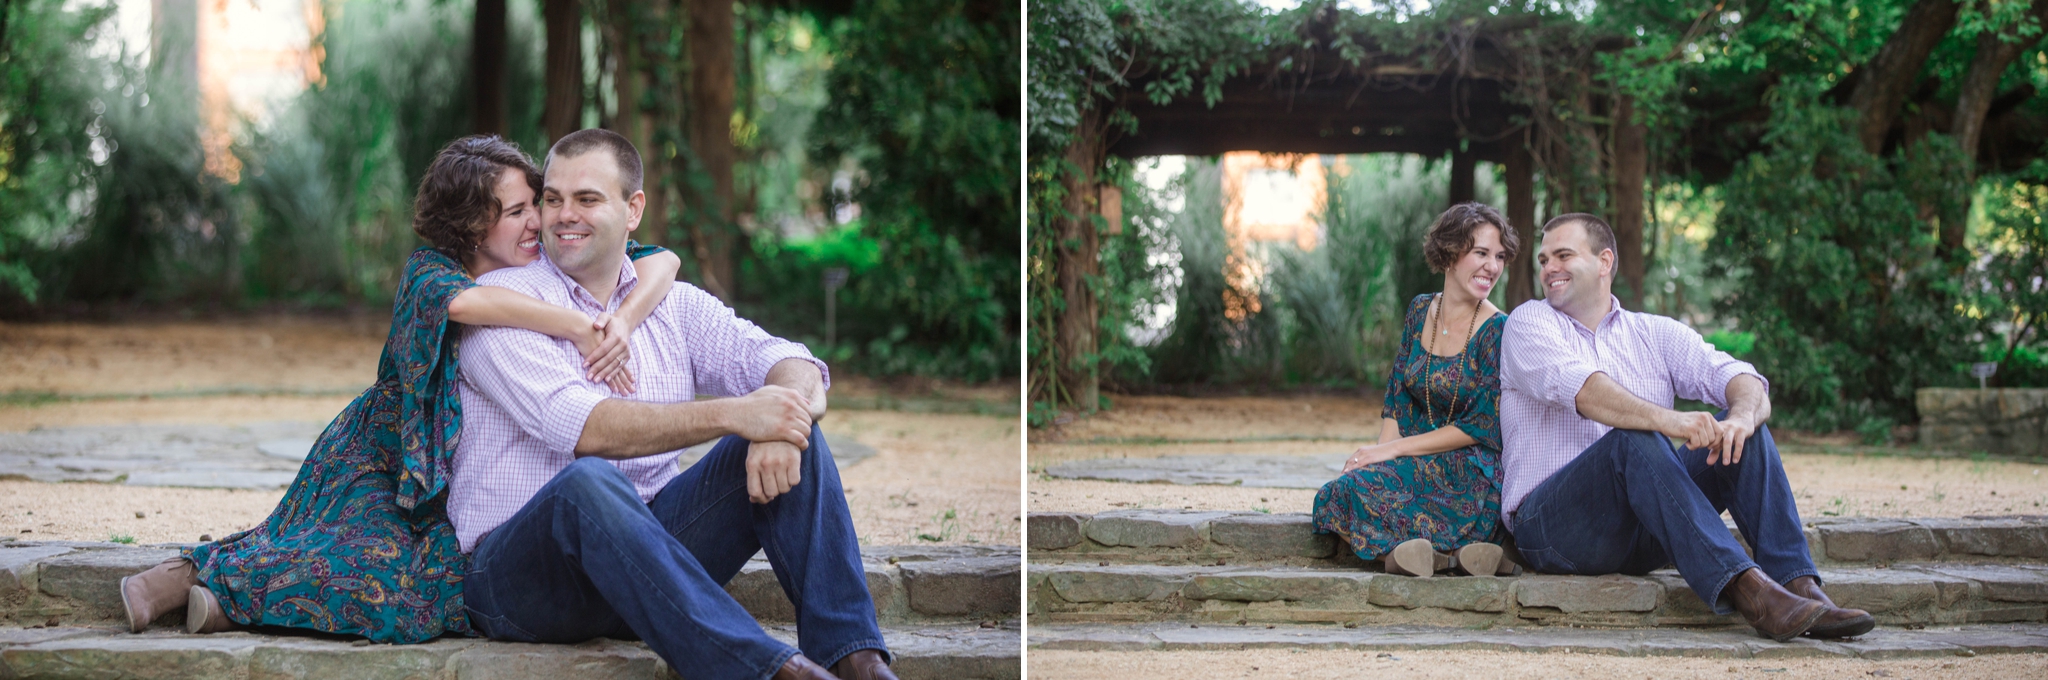 Dani + Adam - Engagement Photography Session at the UNC Chapel Hill Arboretum 